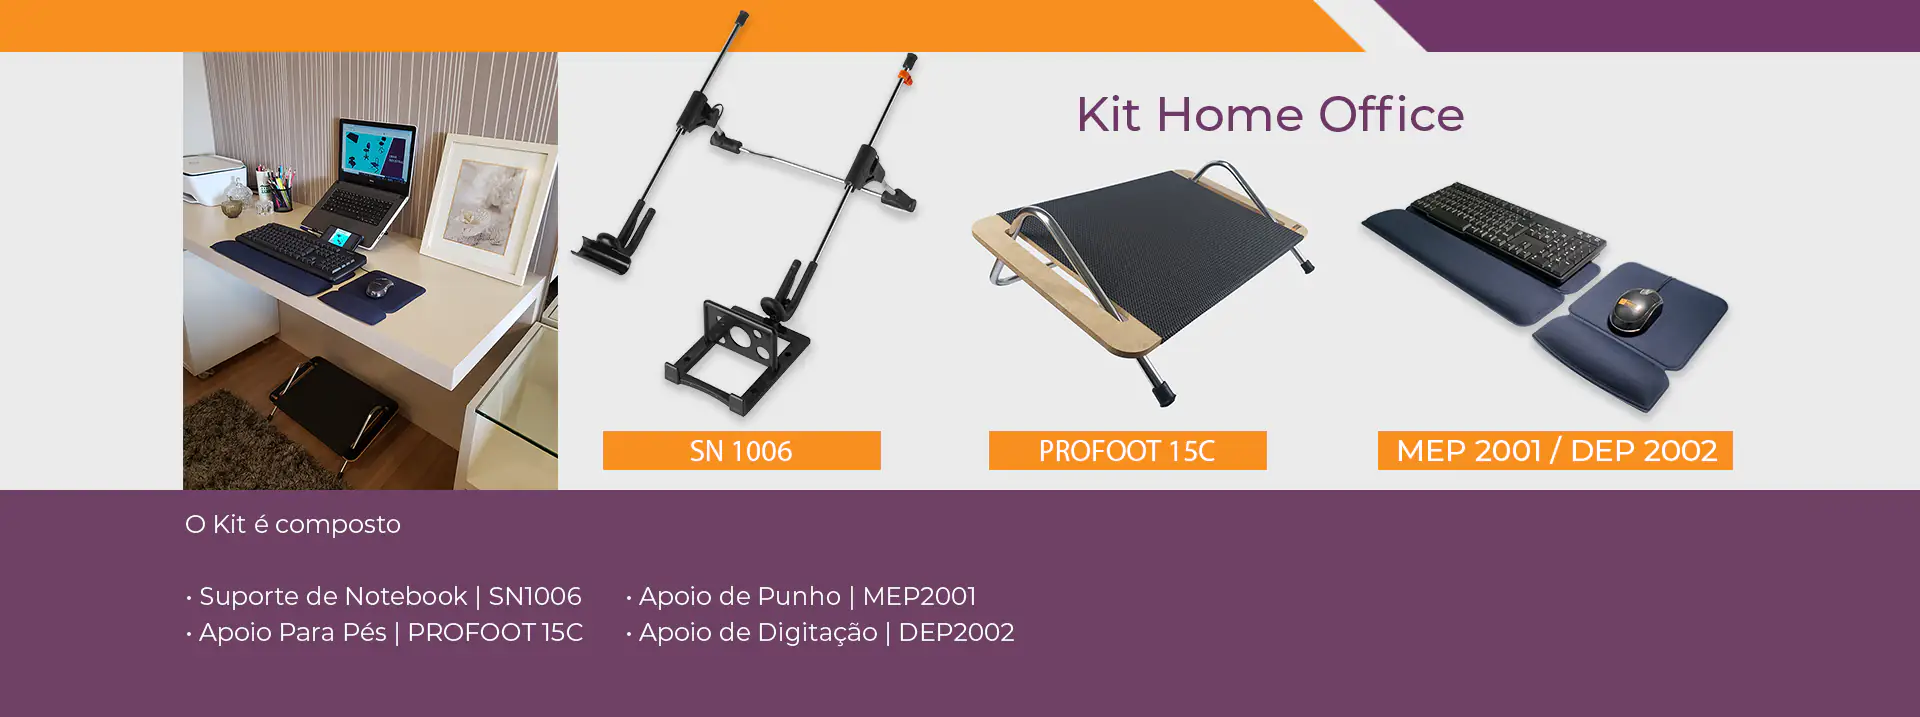 kit-home-office-ergonomico-proderg-supromentos